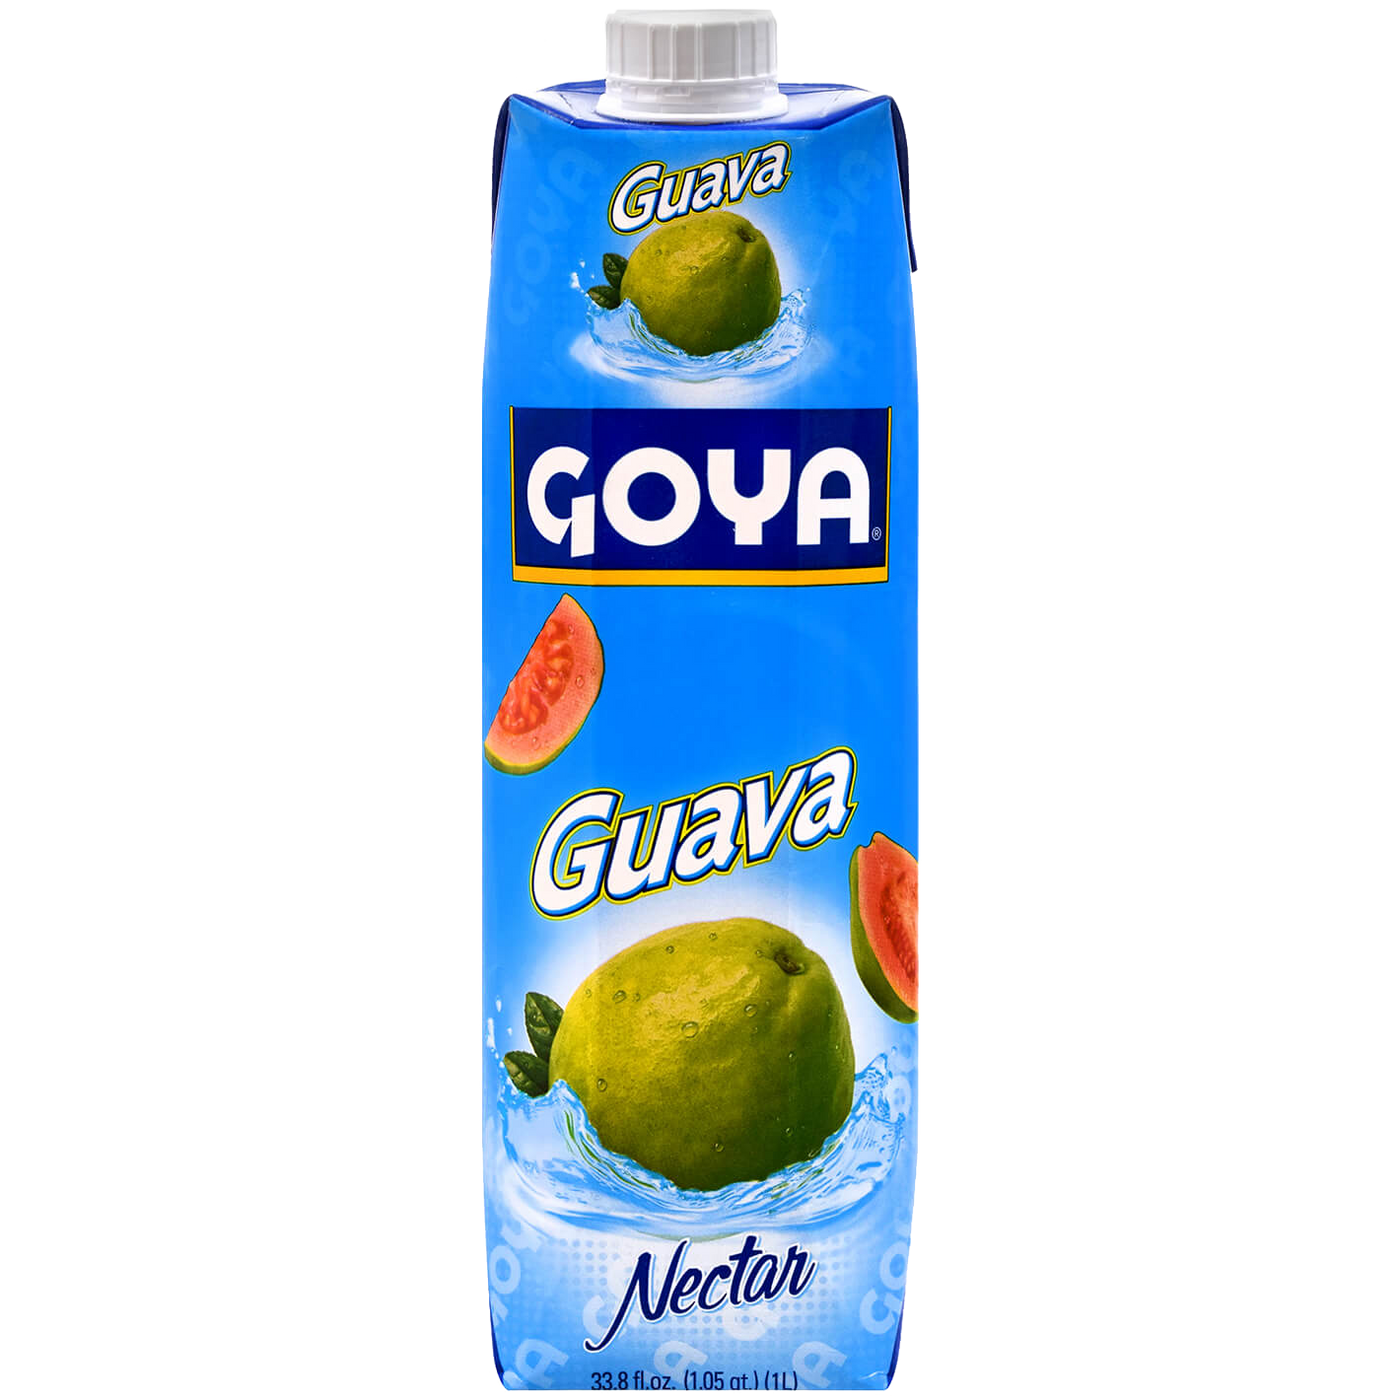   Goya Guava